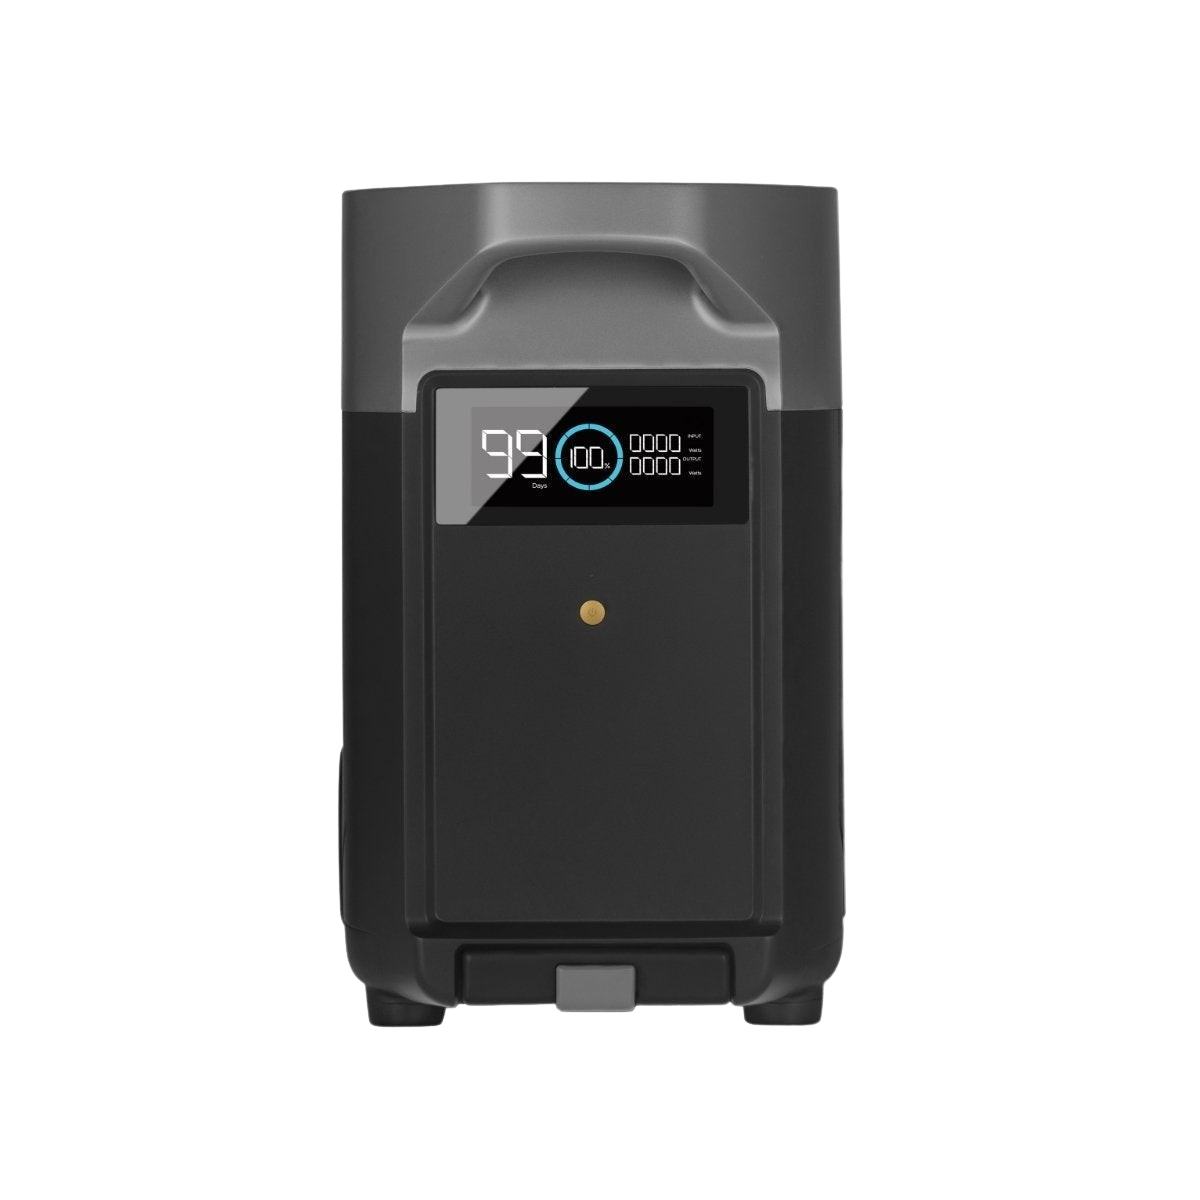 EcoFlow, EcoFlow DELTA Pro Smart Extra Battery 3600Wh New